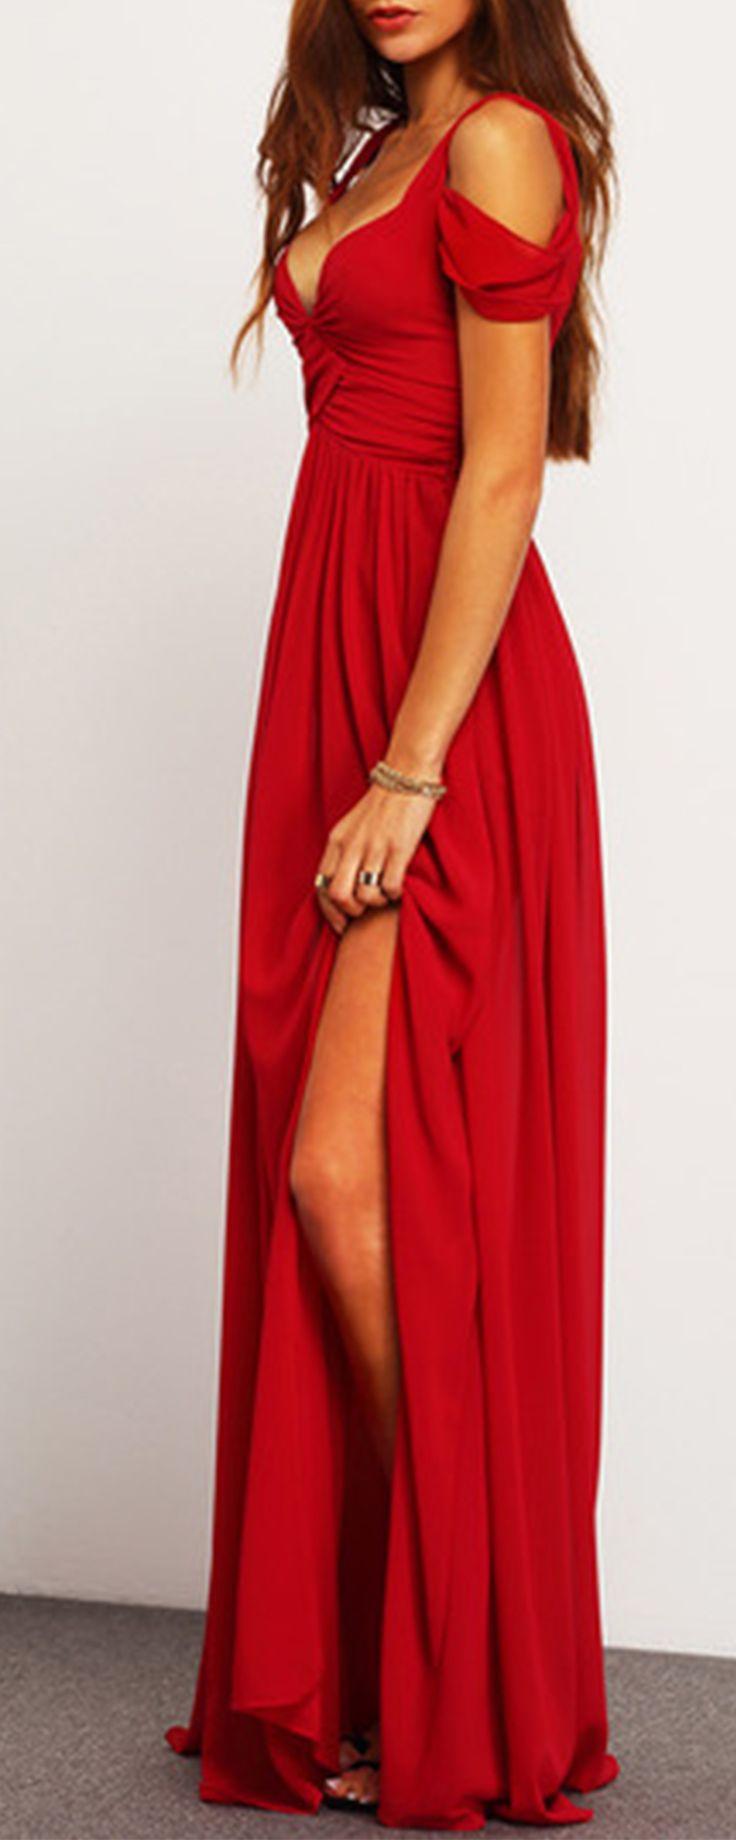 shein red maxi dress